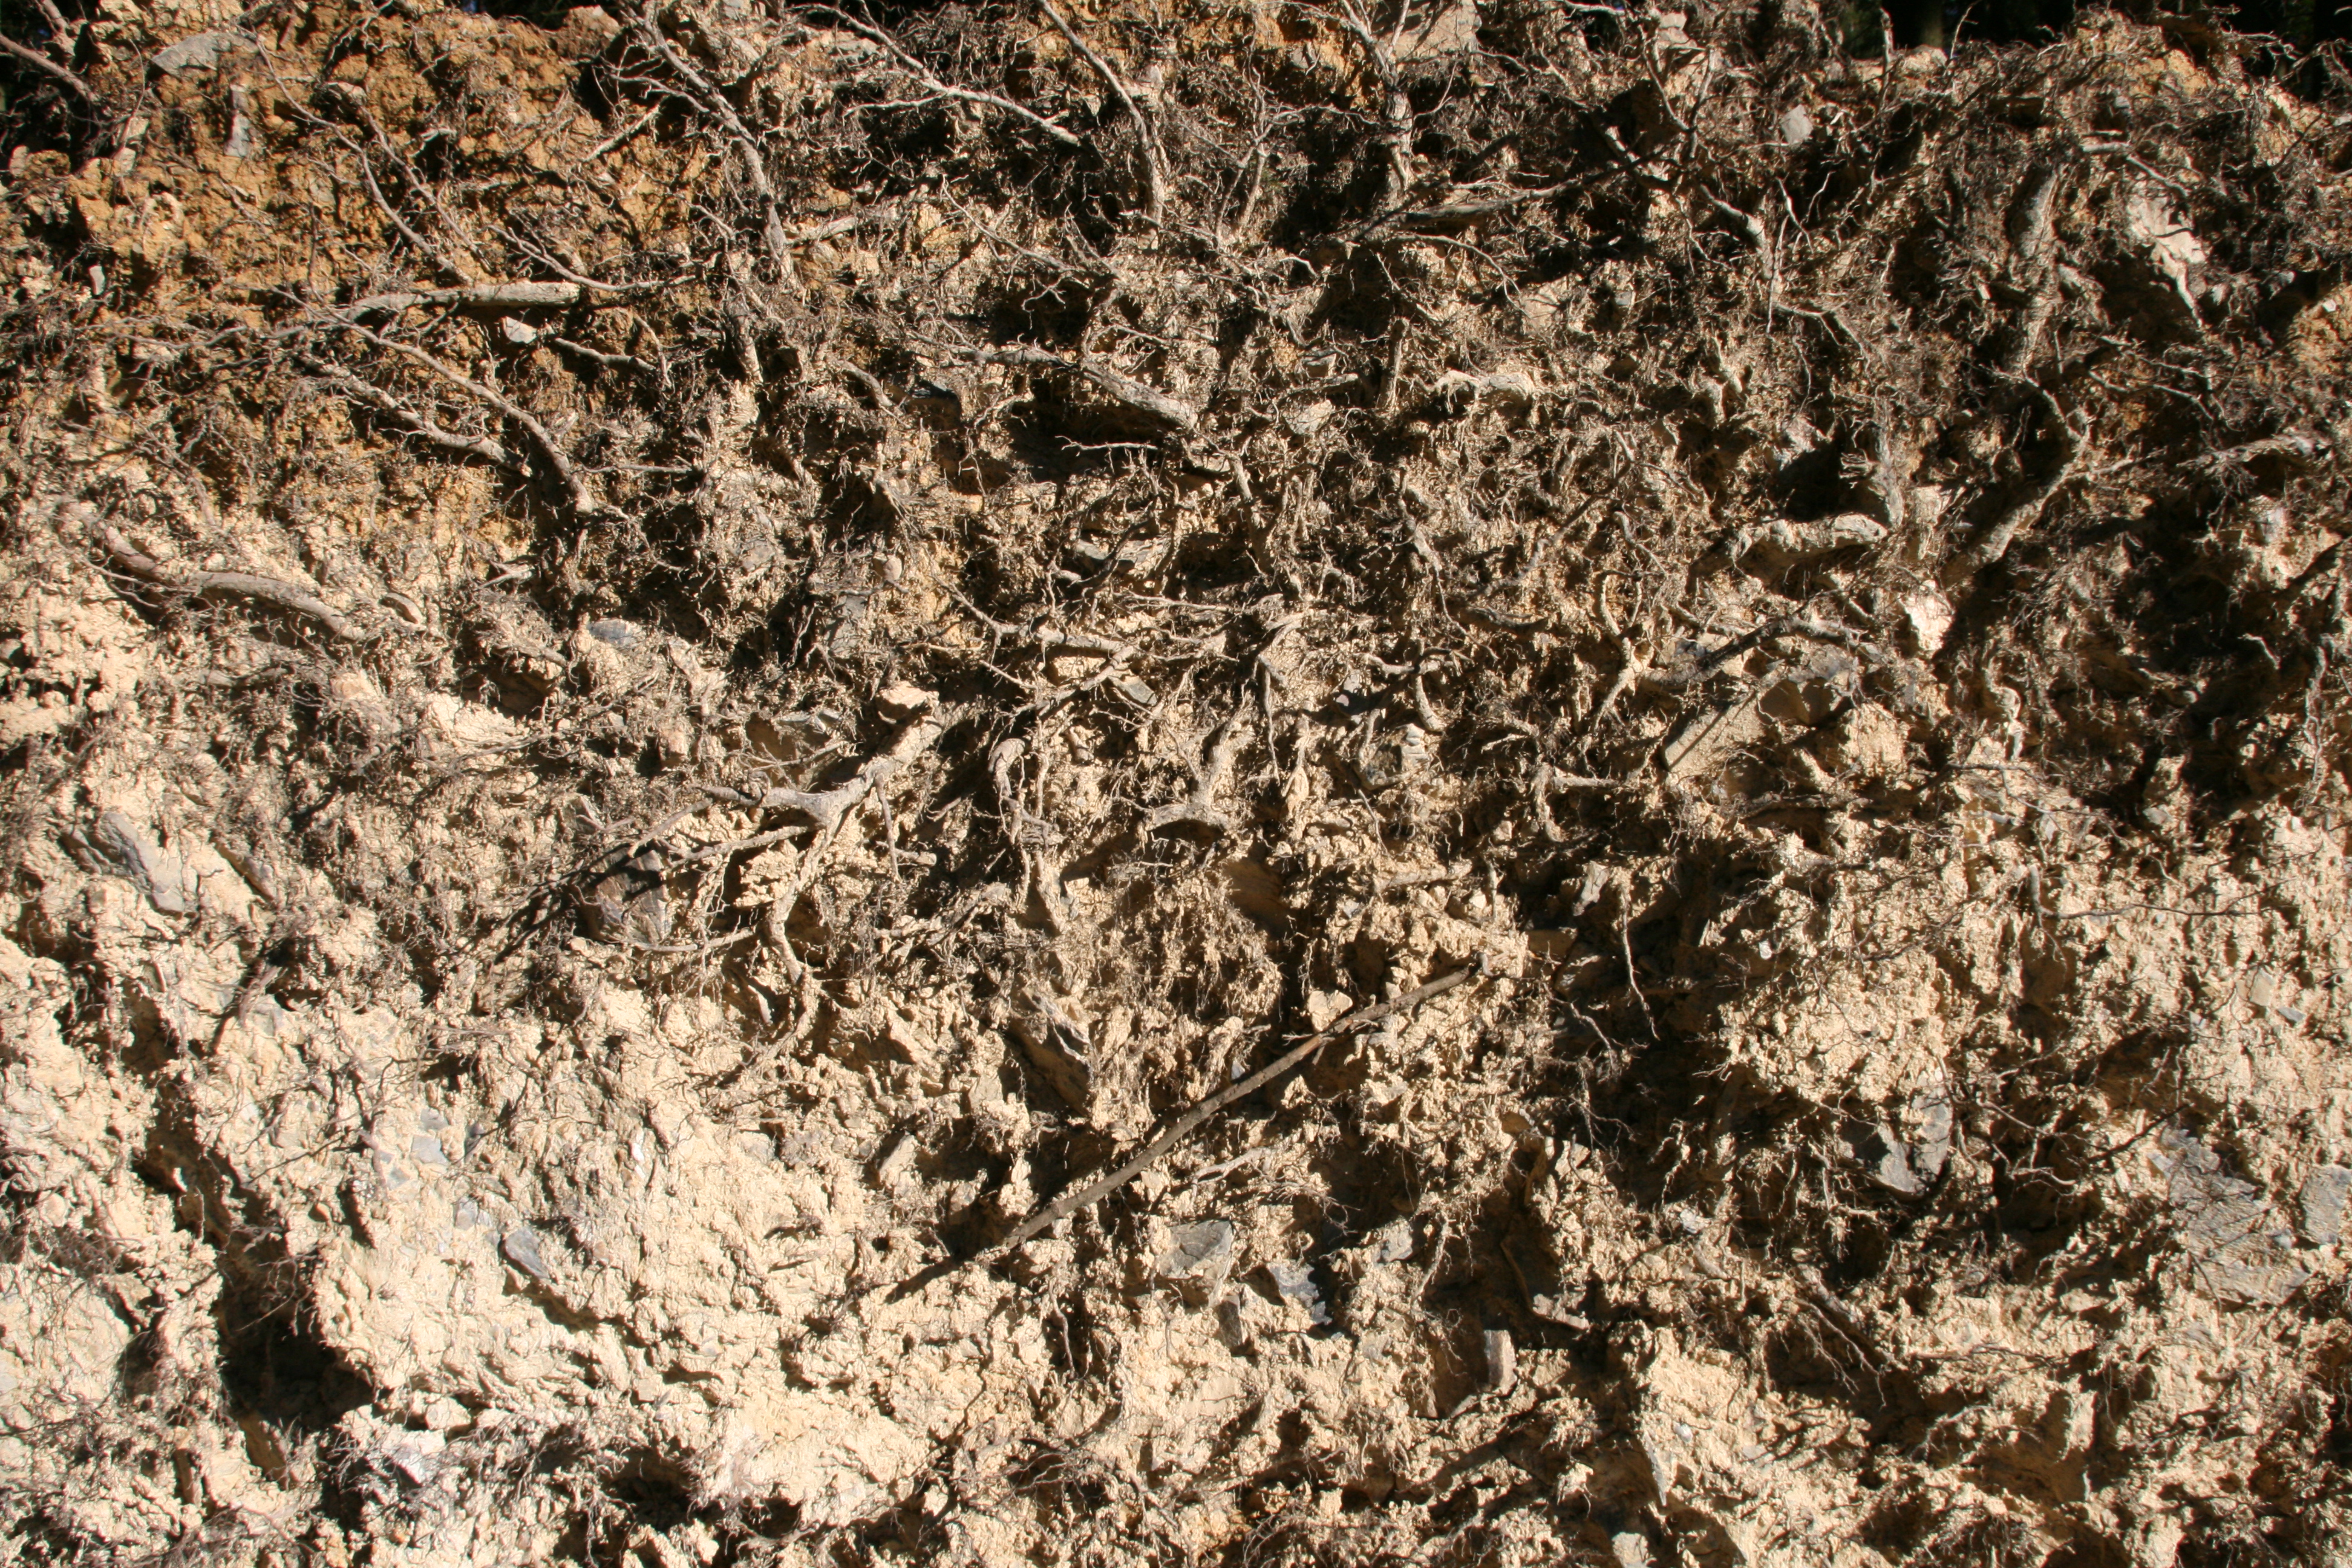 dry mud texture